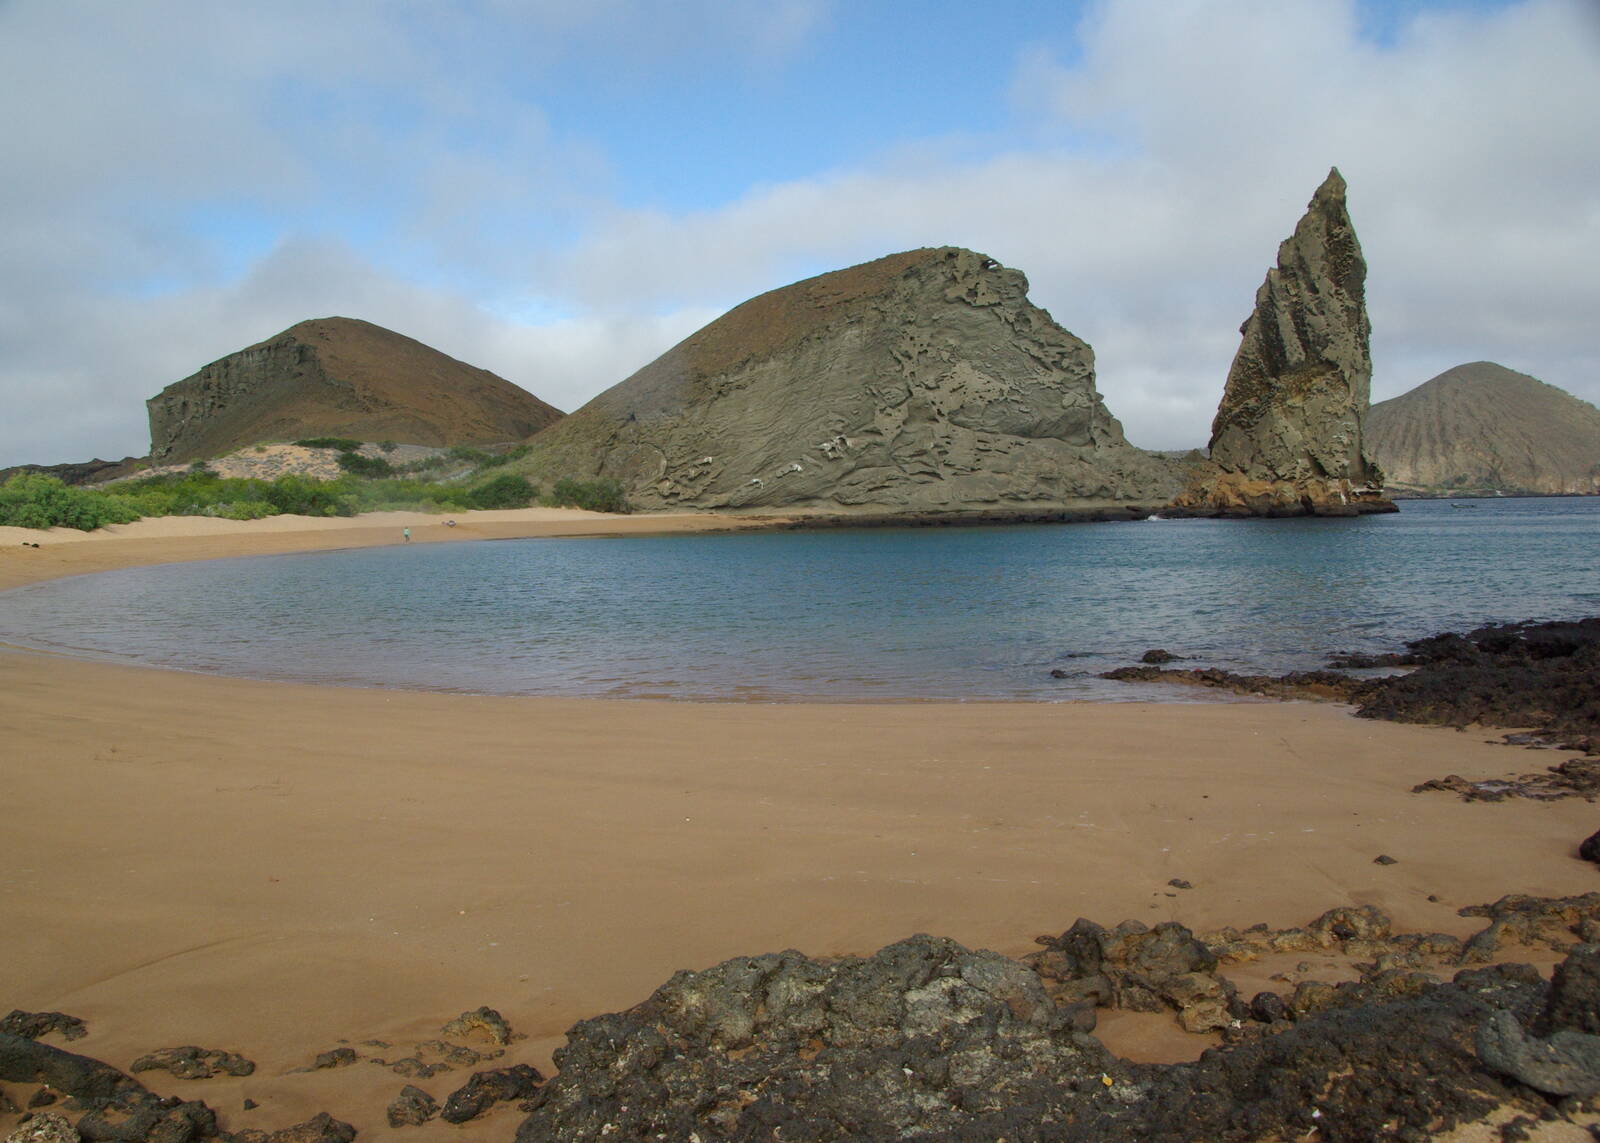 Image of Pinnacle Rock, Galapagos by Nigel Shaw